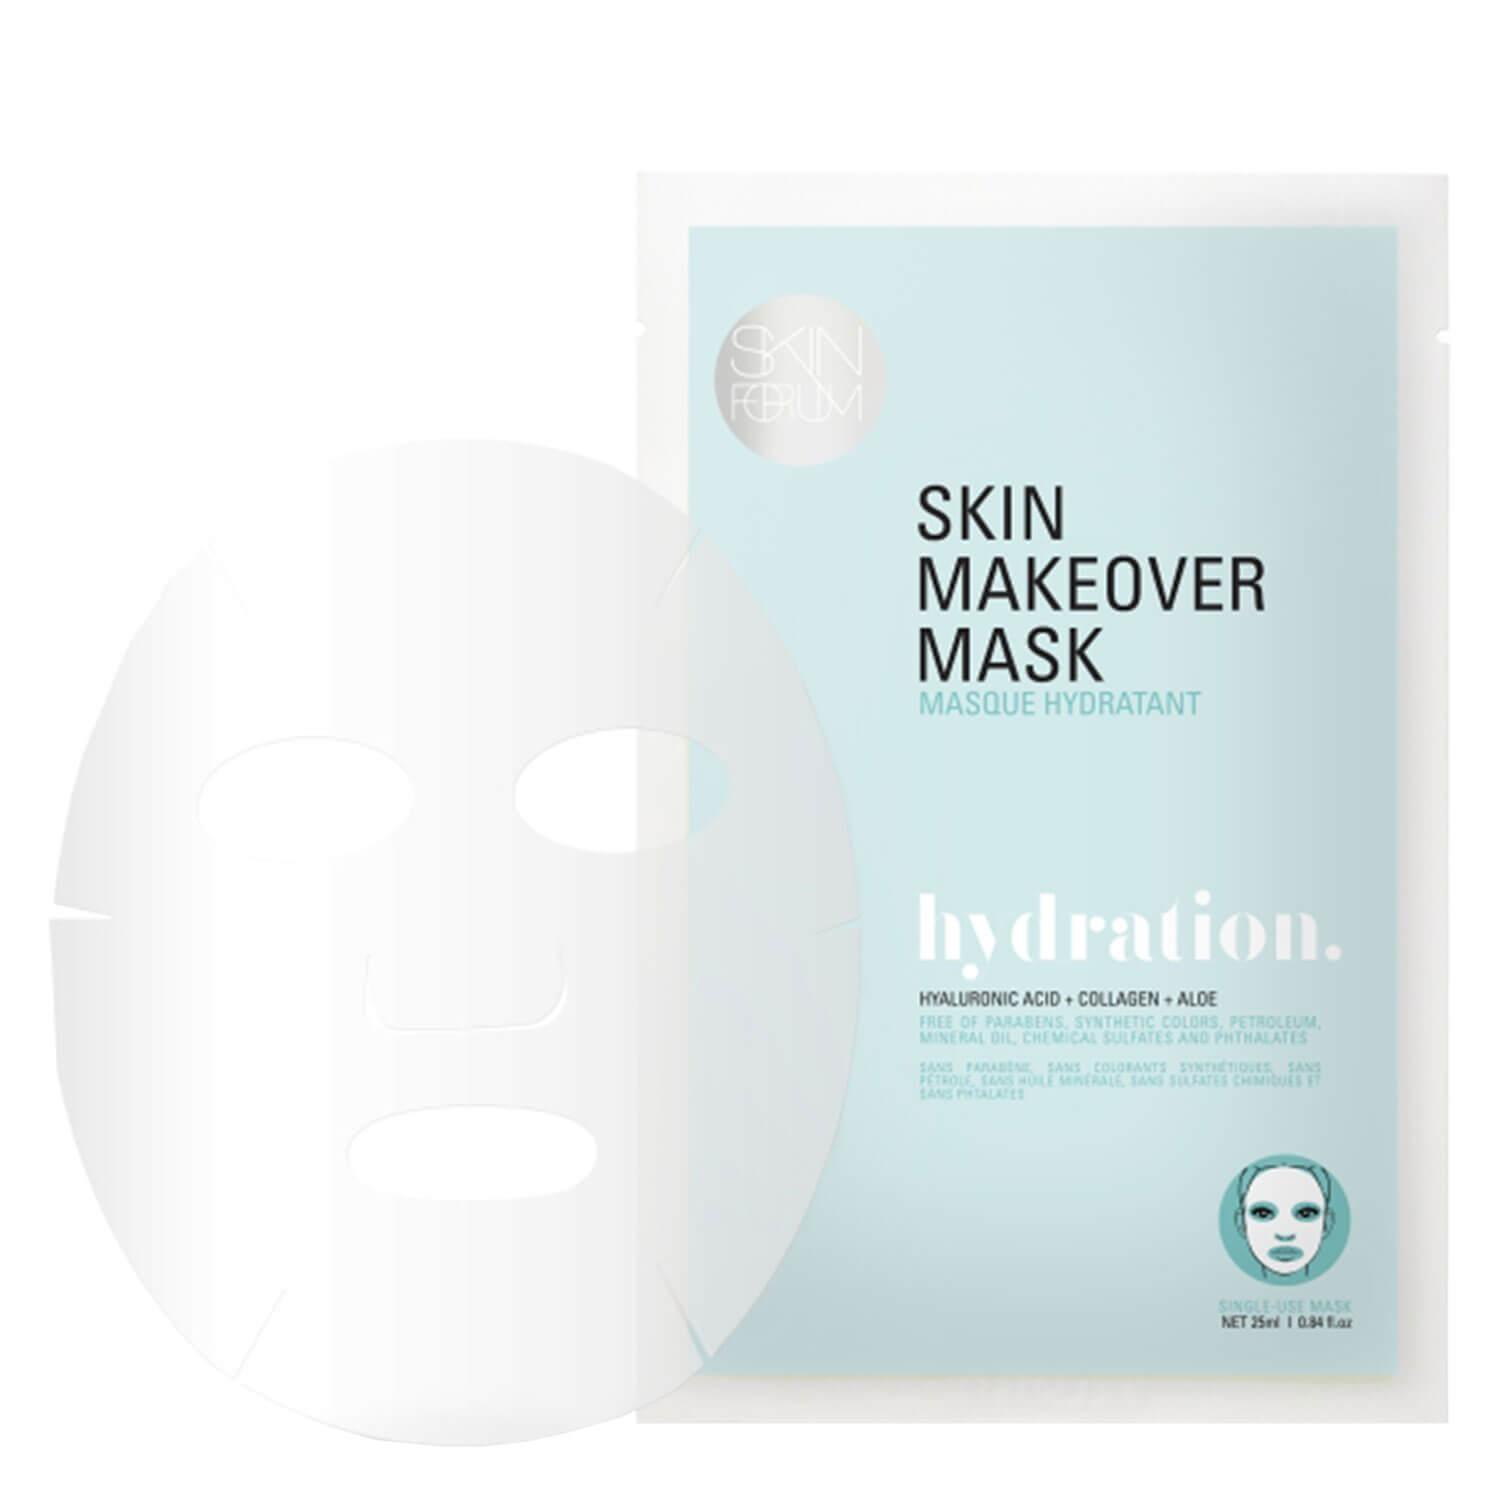 VOESH New York - Skin Makeover Mask hydration